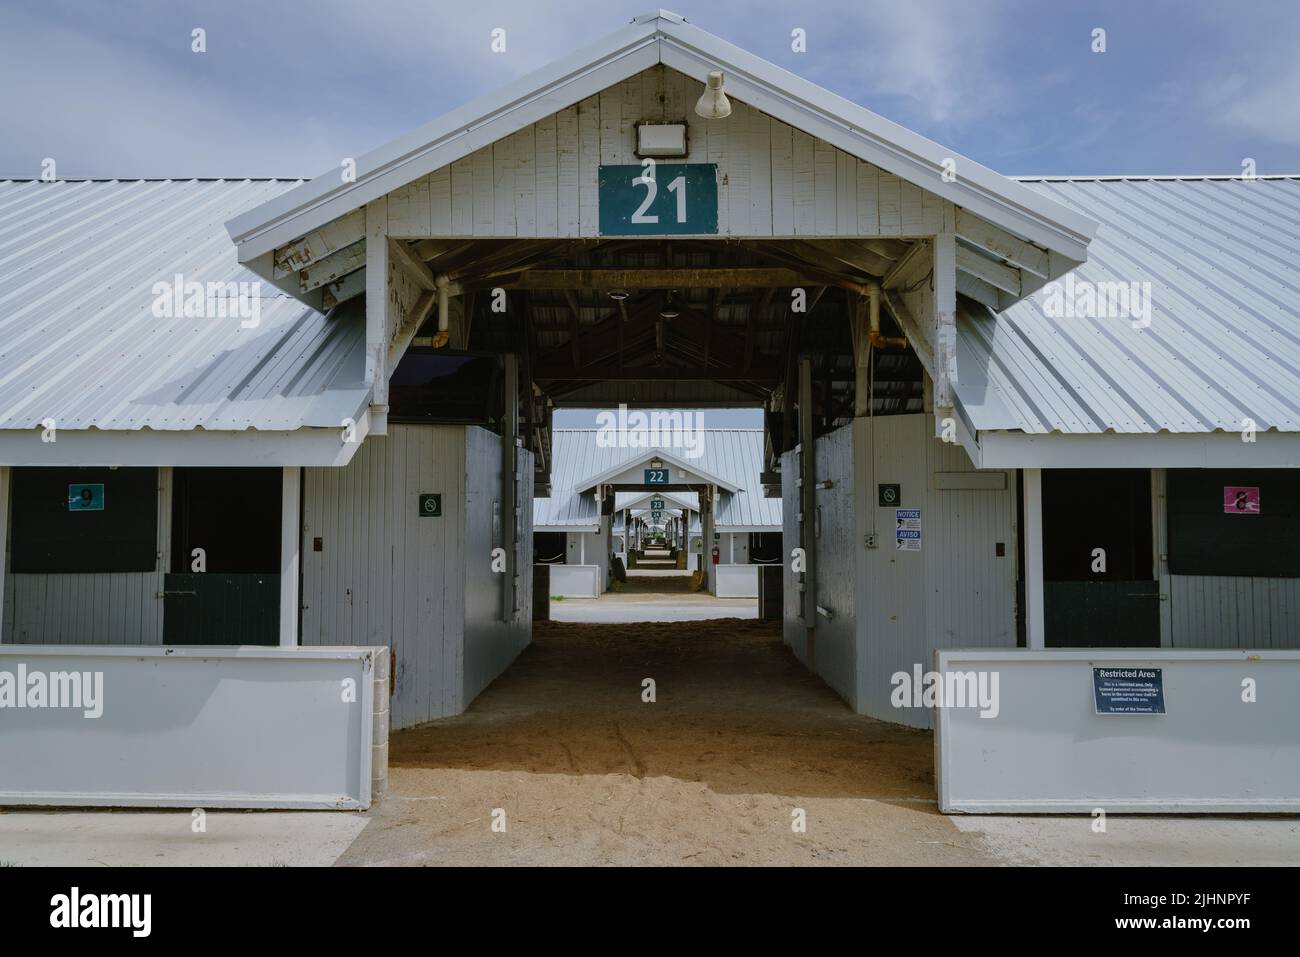 April 17, 2022, Lexington, Kentucky: Row of horse stables at Keeneland Race Track in Lexington, Kentucky Stock Photo